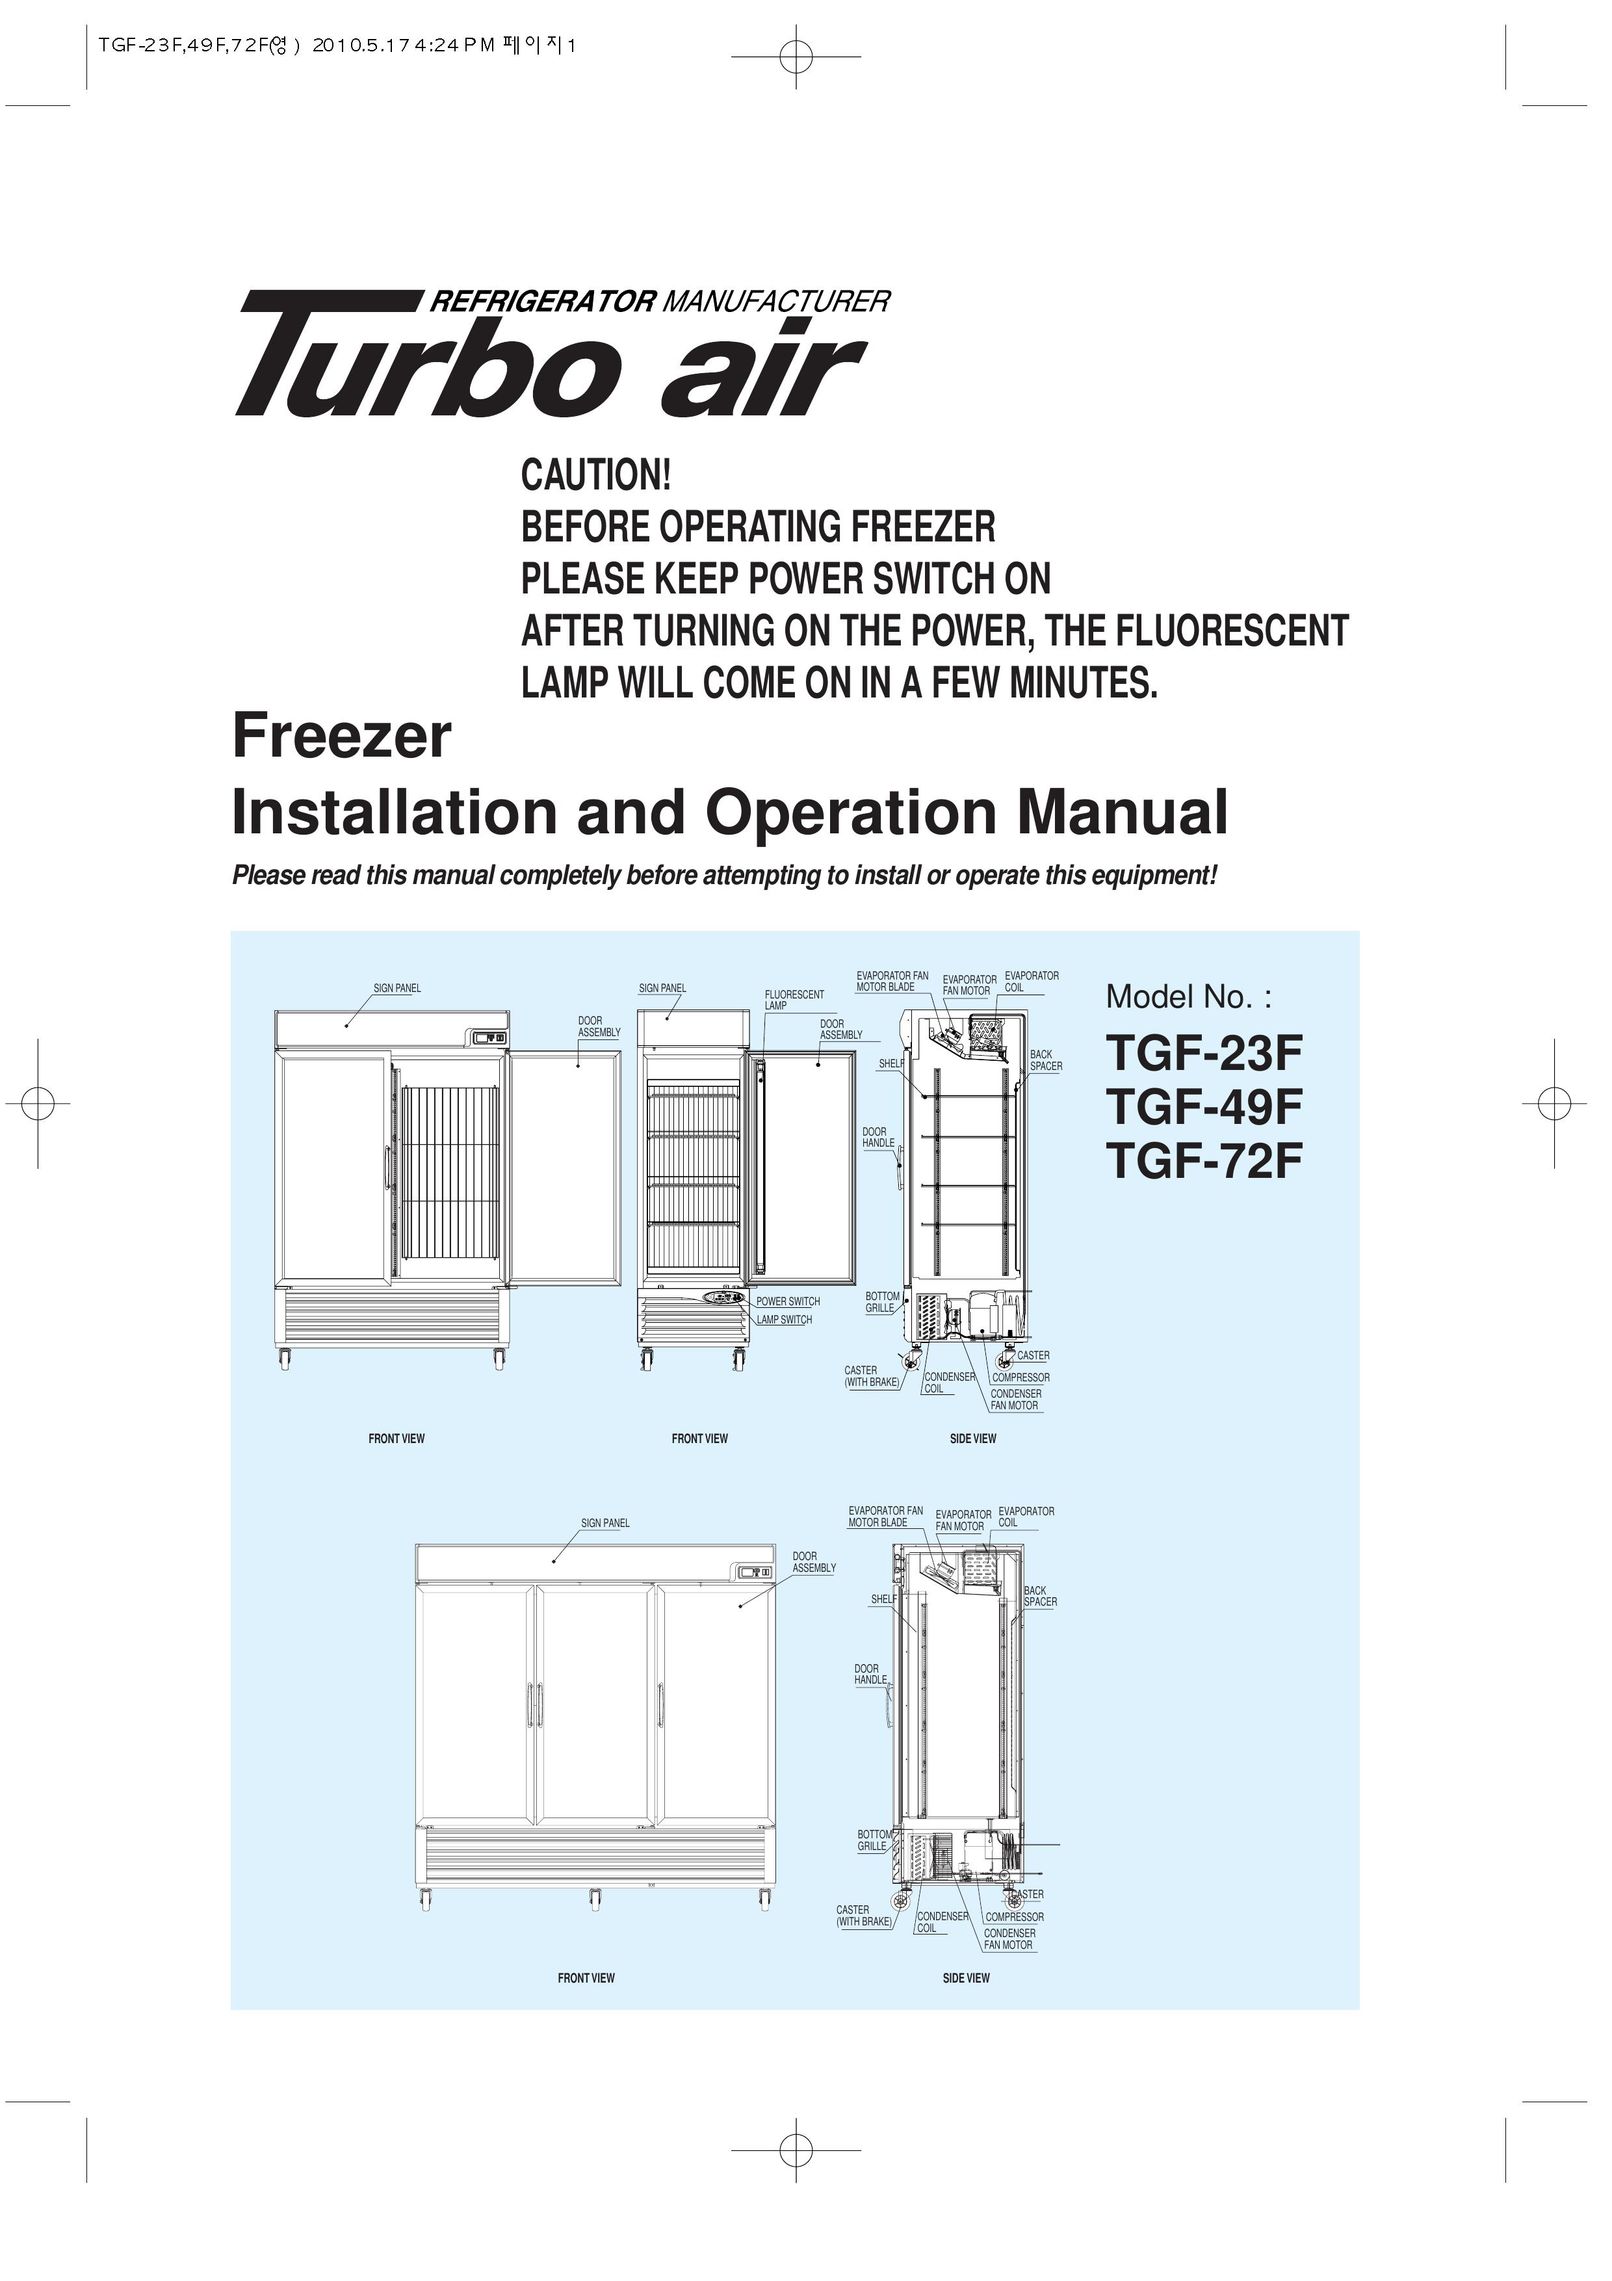 Turbo Air TGF-49F Freezer User Manual